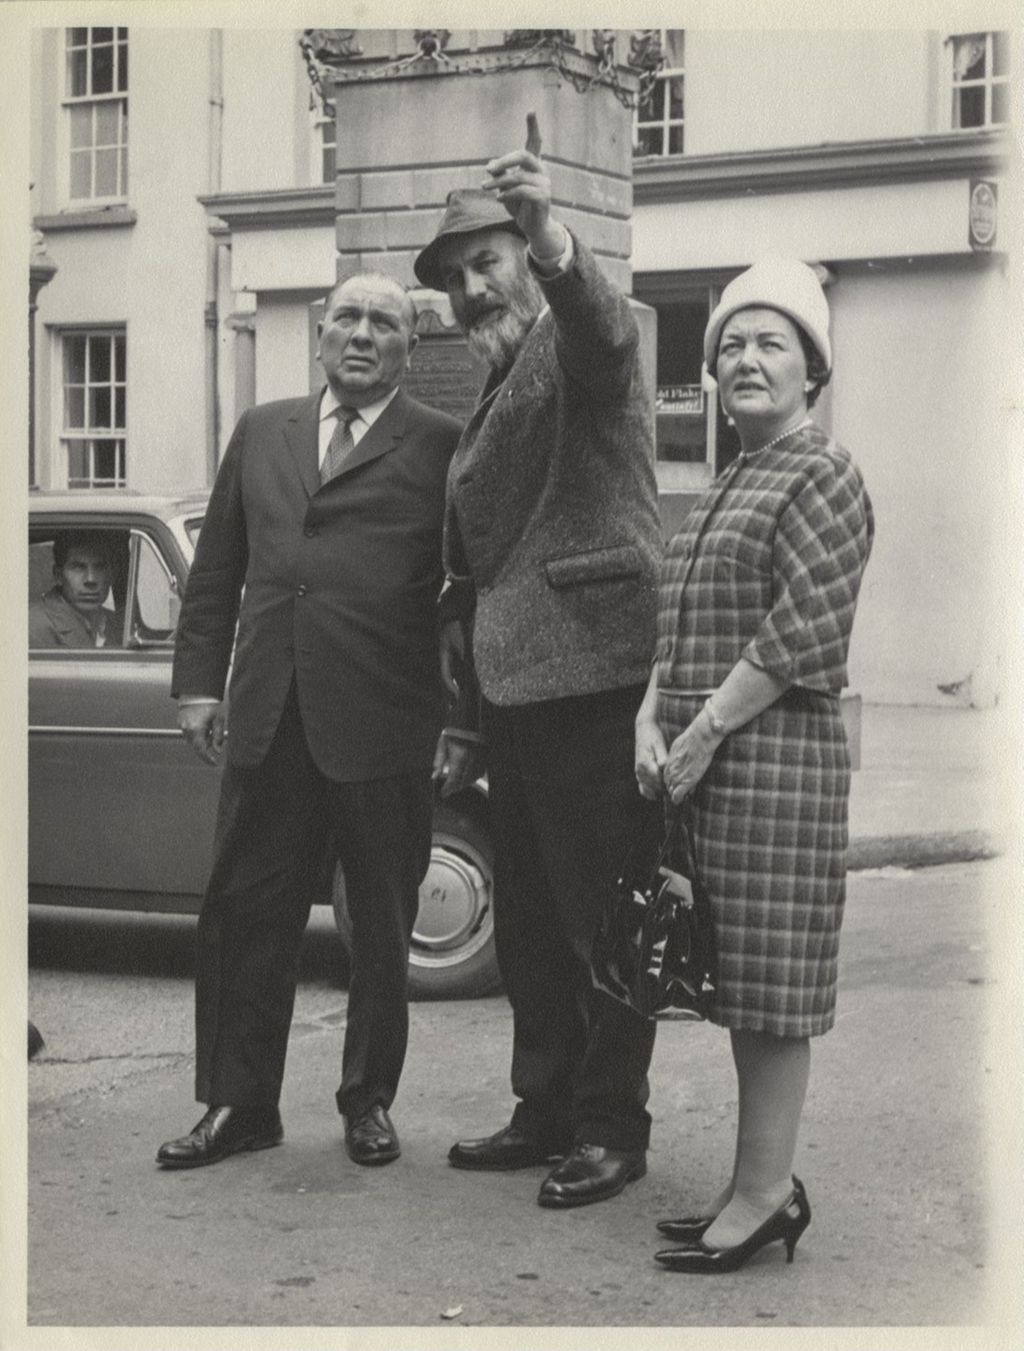 Trip to Ireland, Richard J. and Eleanor Daley sightseeing with Dungarvan mayor